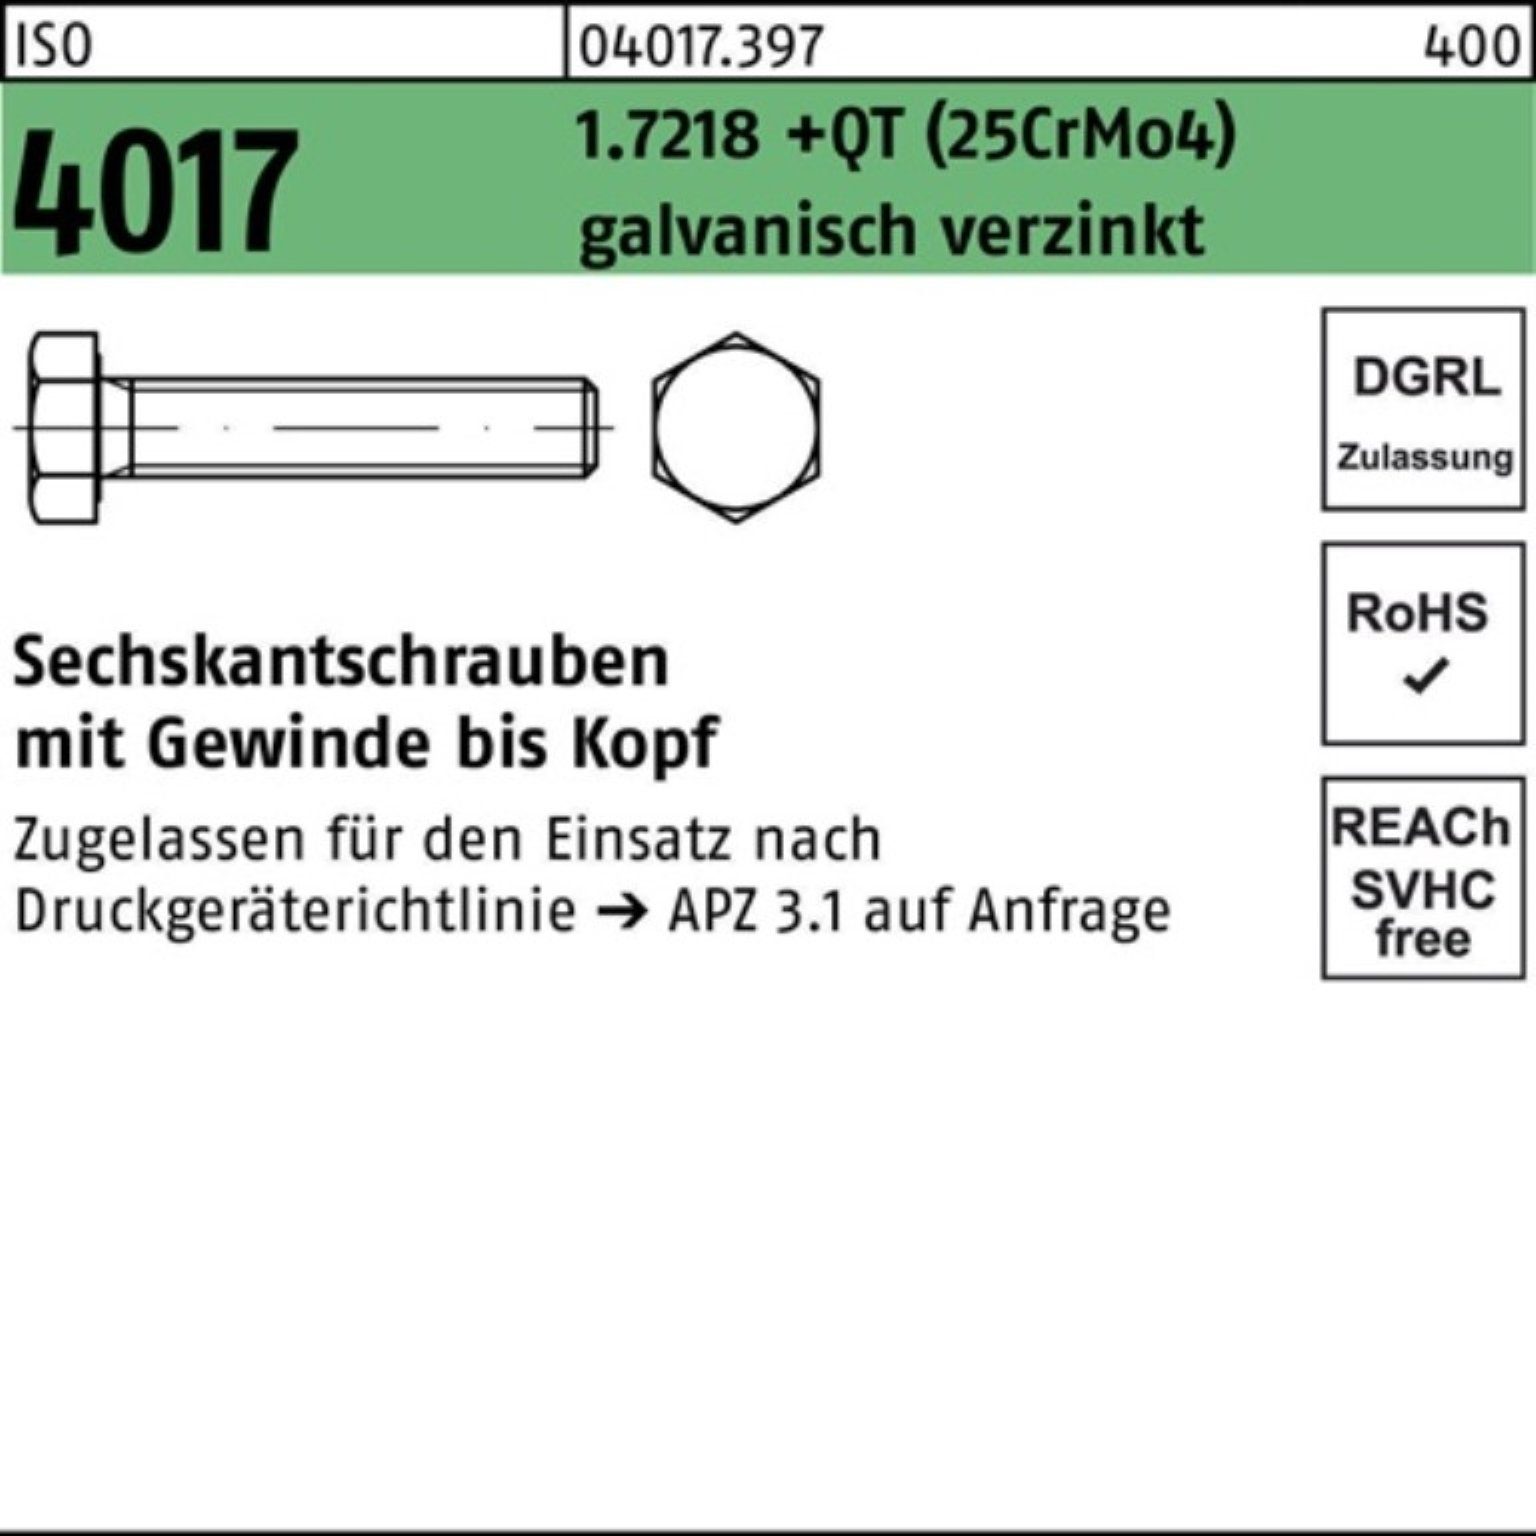 VG (25CrMo4) Pack ISO Sechskantschraube 4017 +QT g Sechskantschraube 1.7218 100er Bufab M27x75